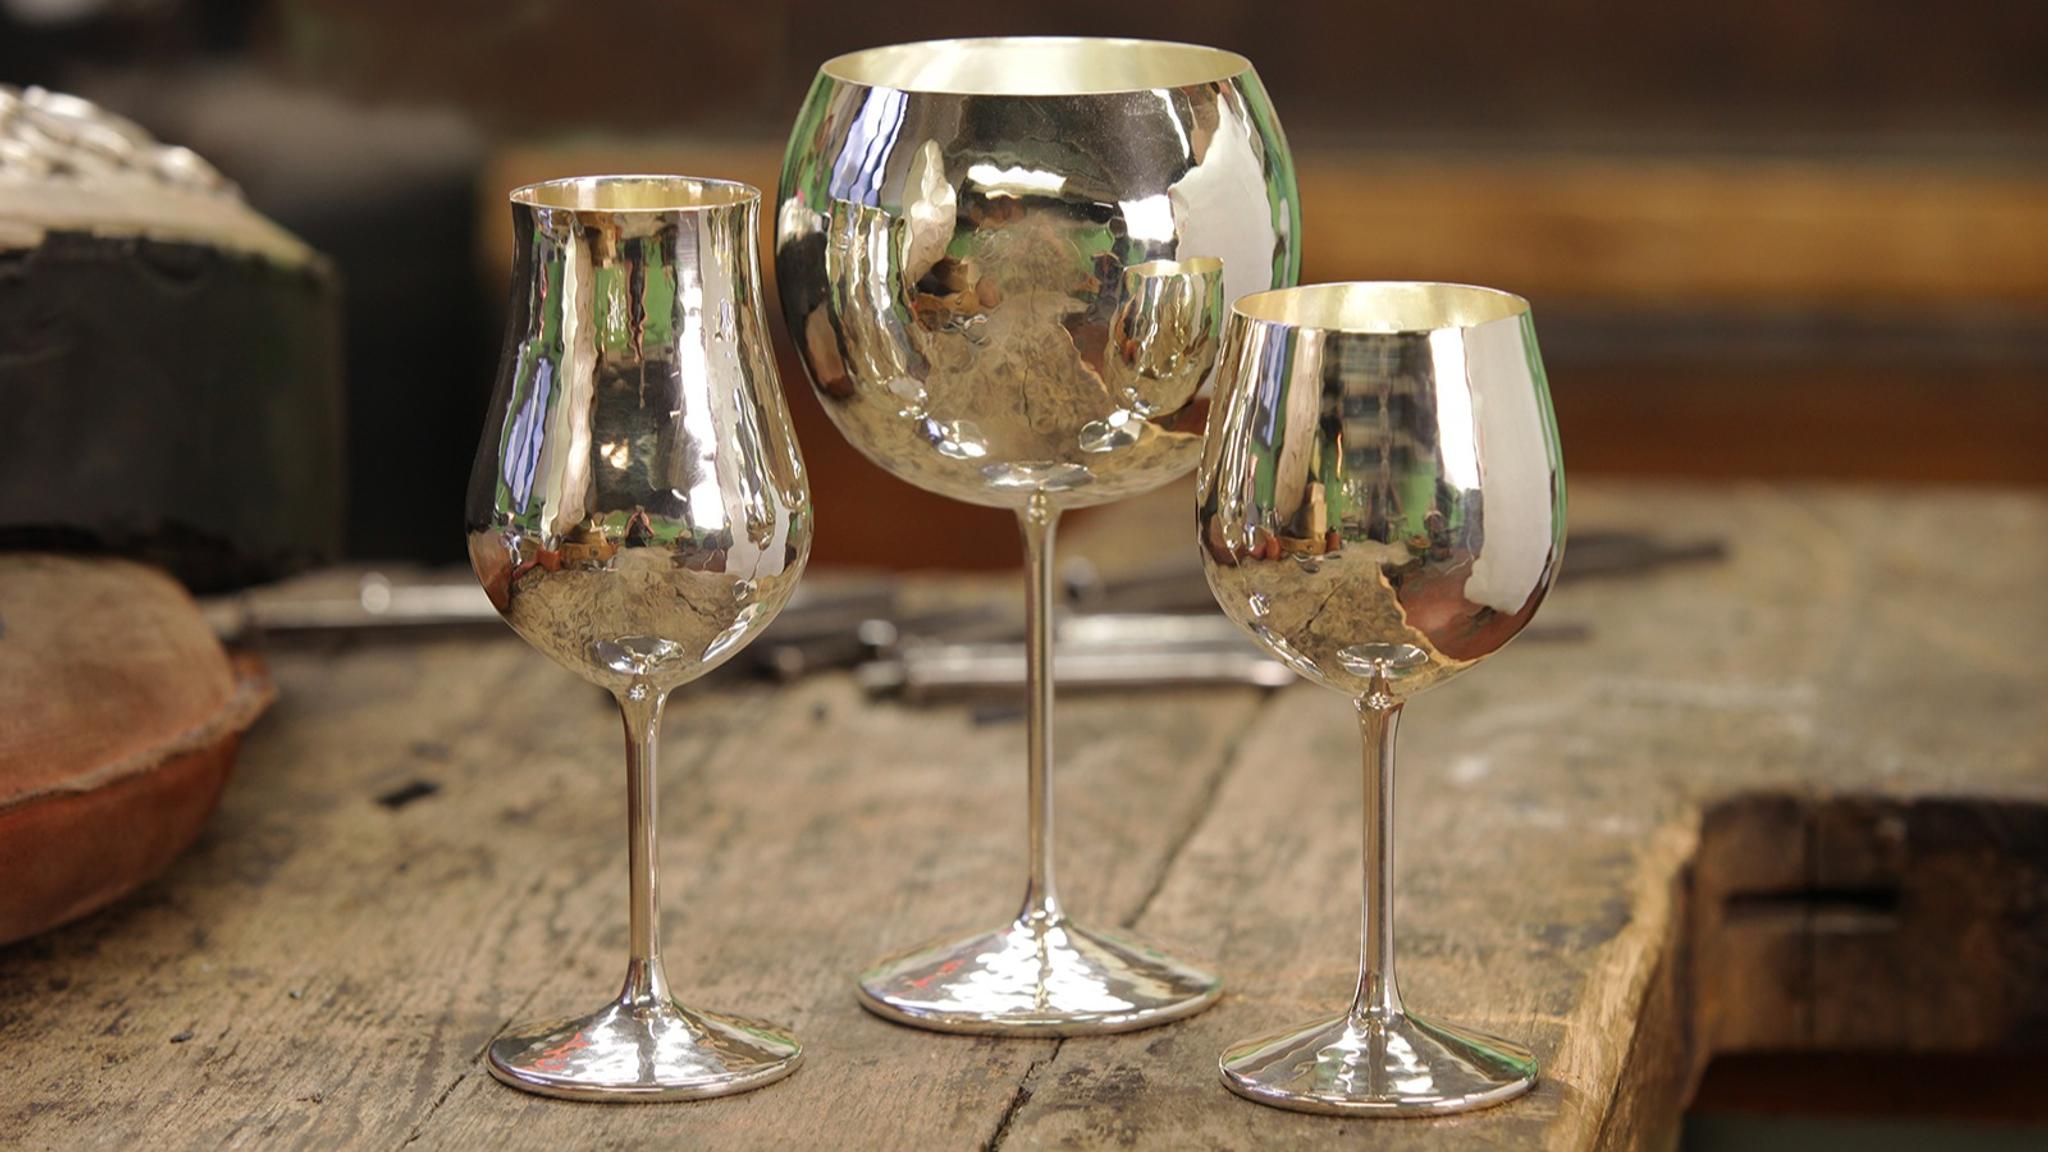 Silver wine goblets made by brandimarte